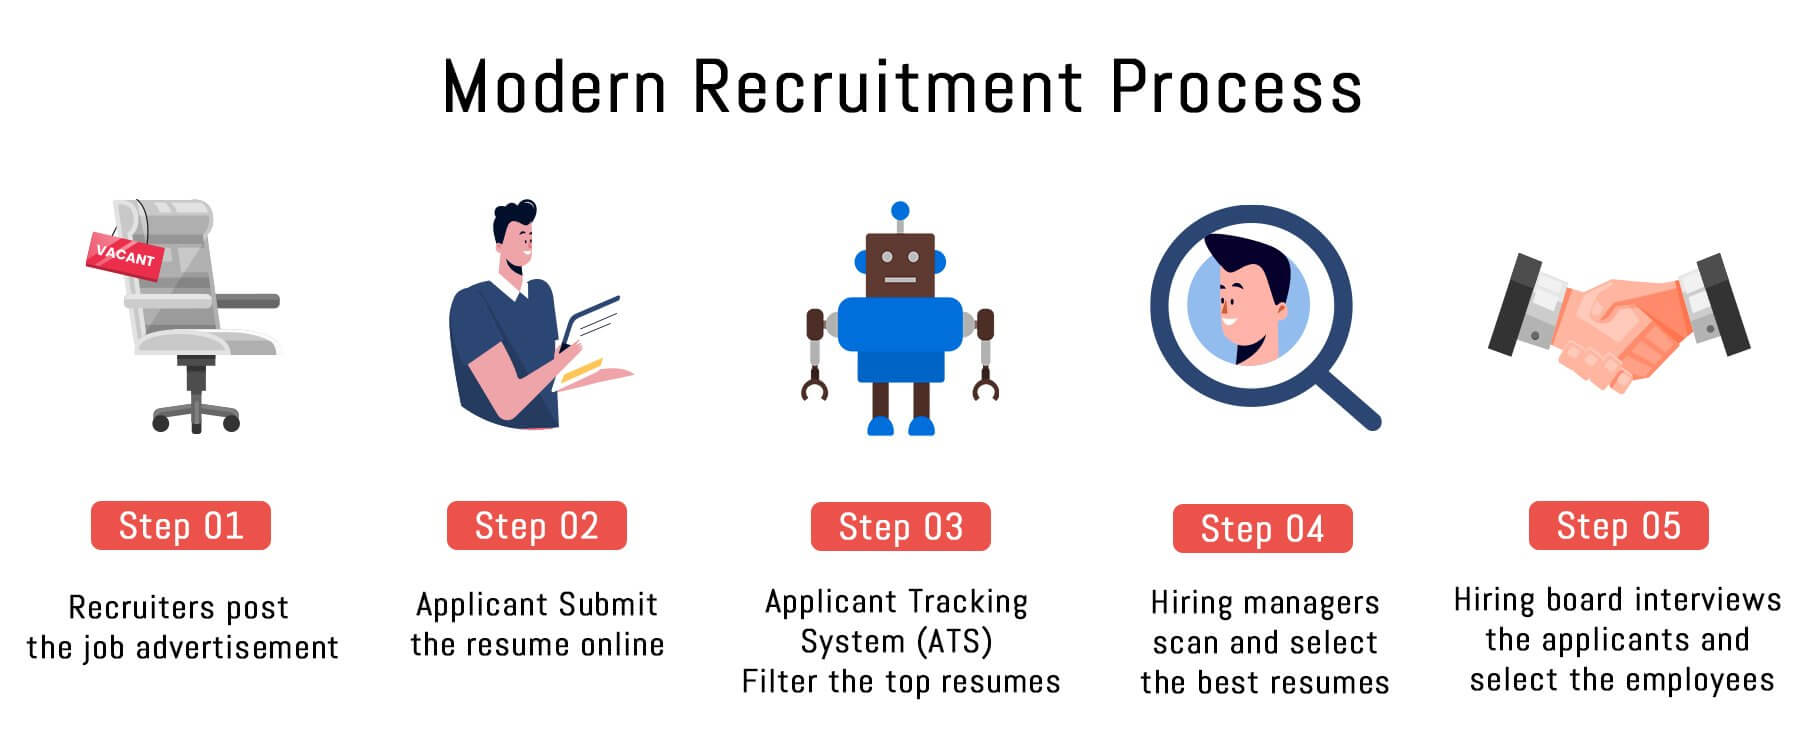 Modern recruitment process image